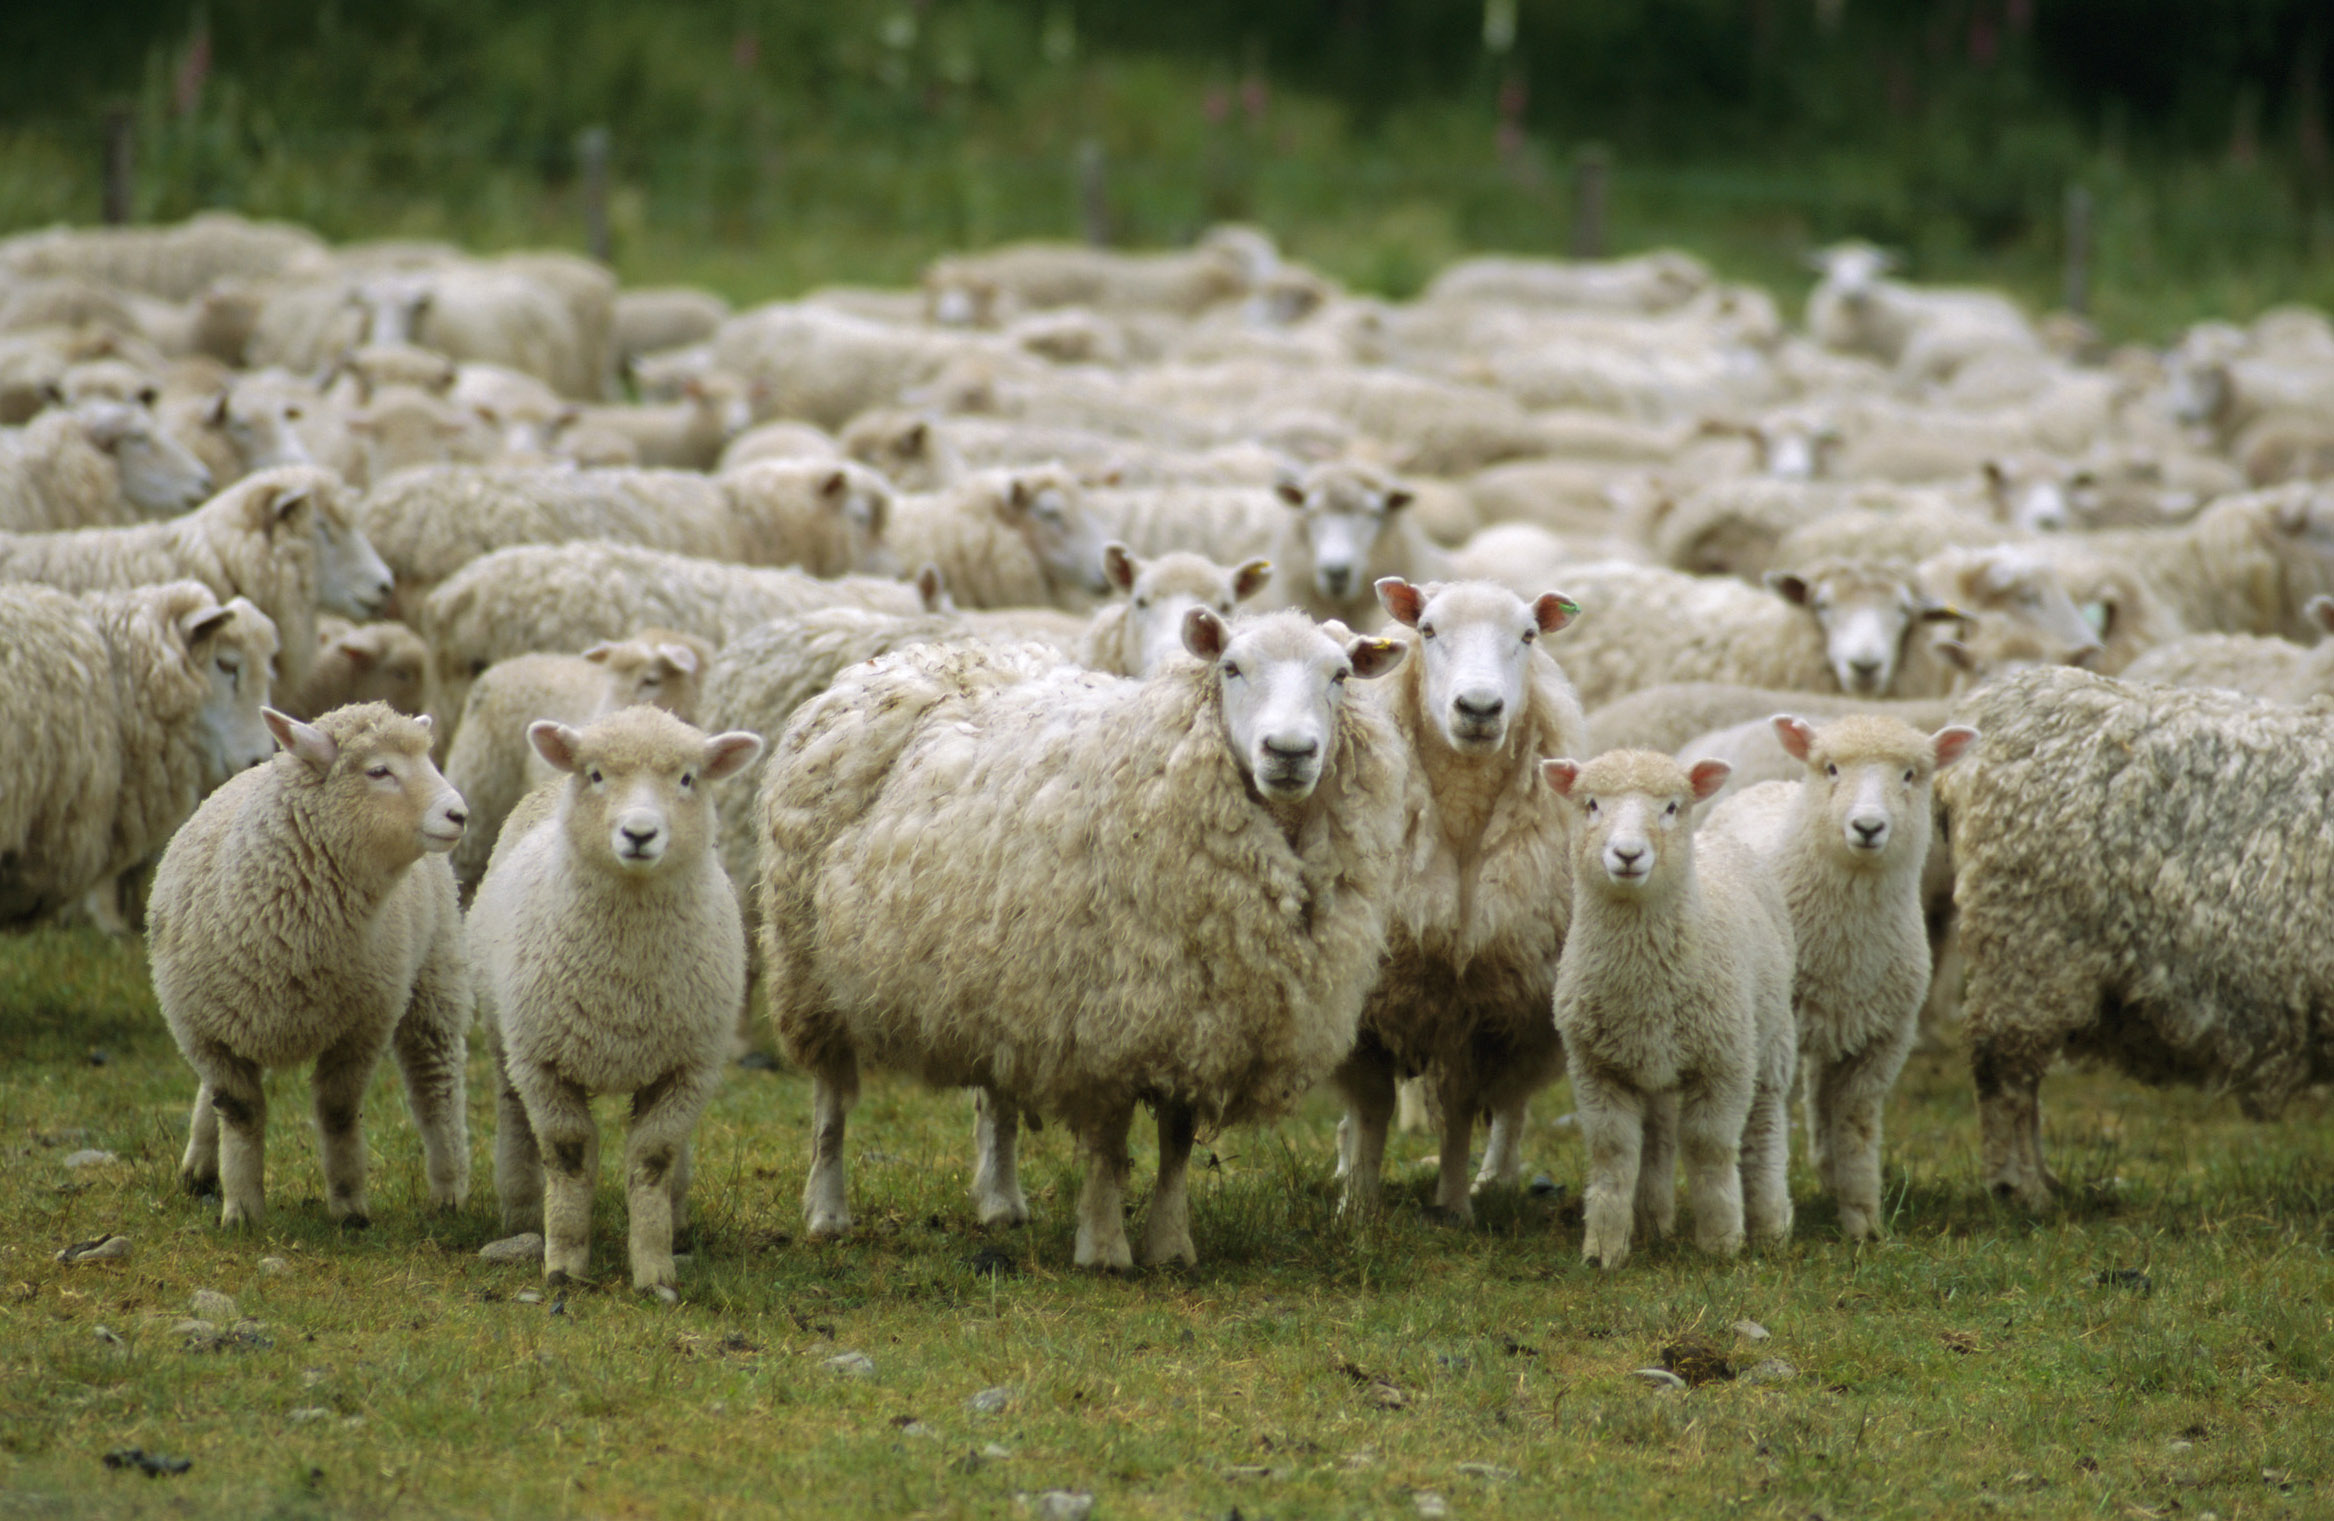 Flock of sheep, New Zealand, Pacific | Mundabor's Blog